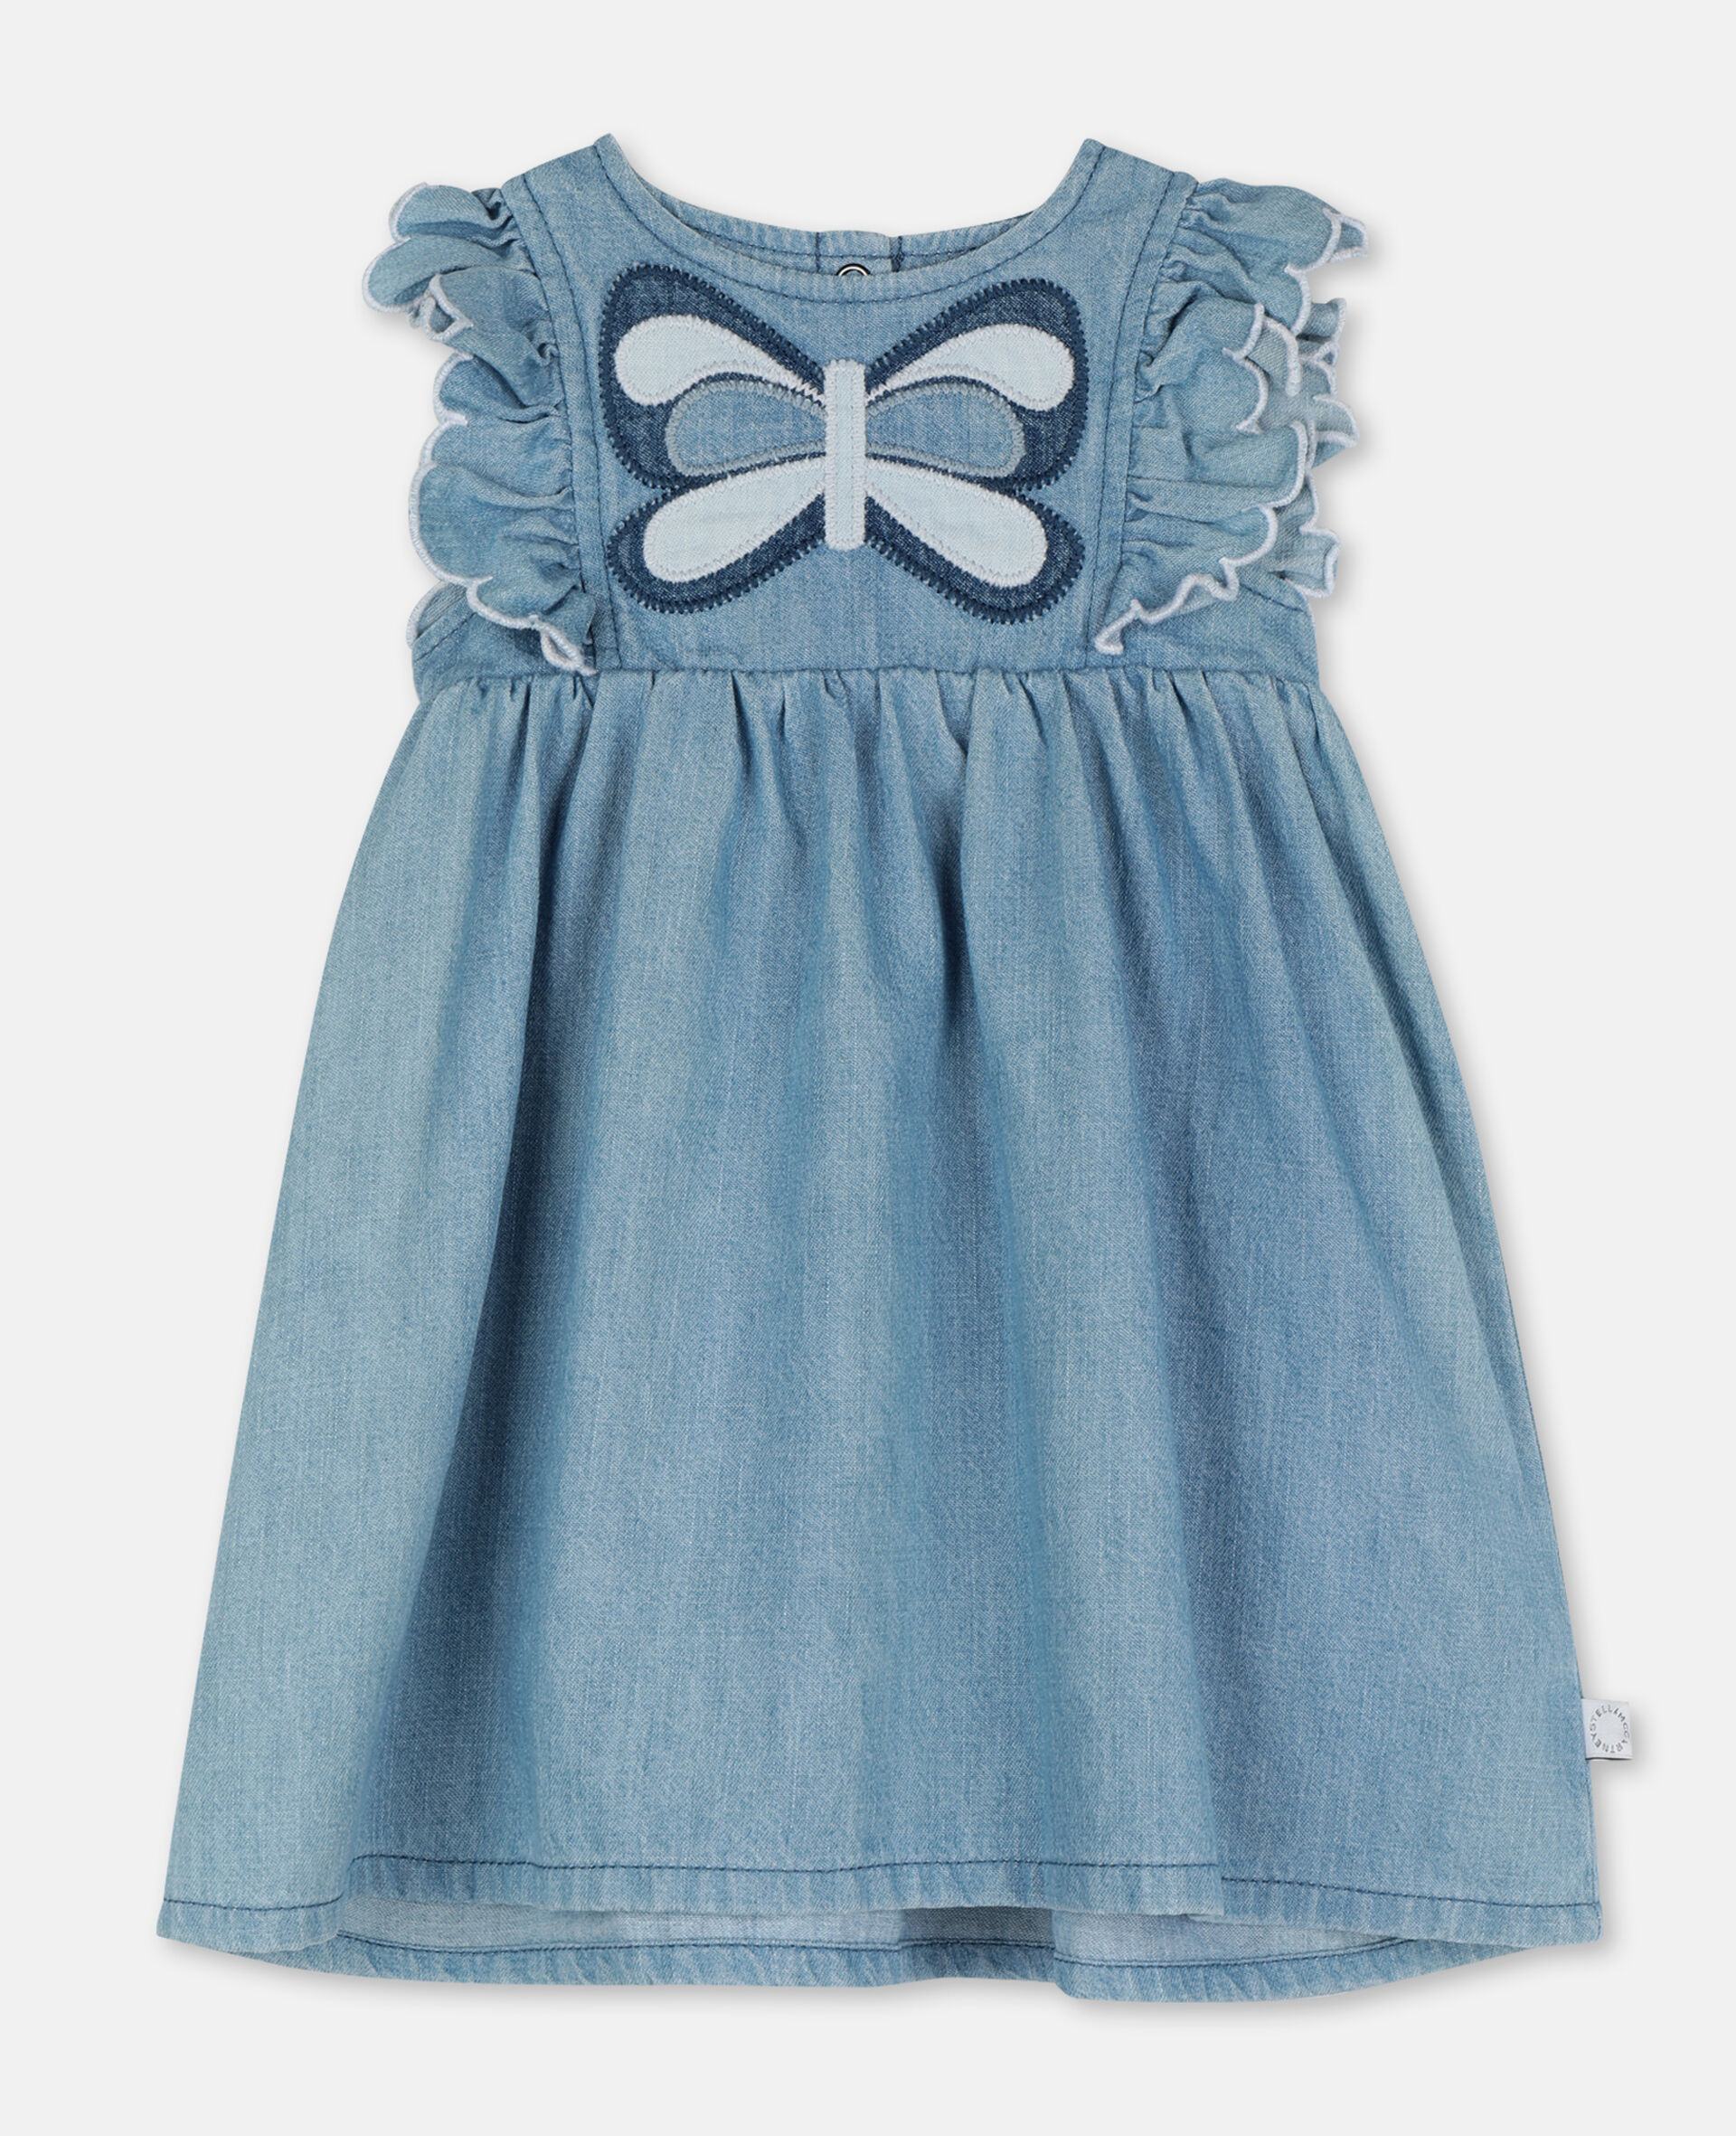 Butterfly Patch Denim Dress-Blue-large